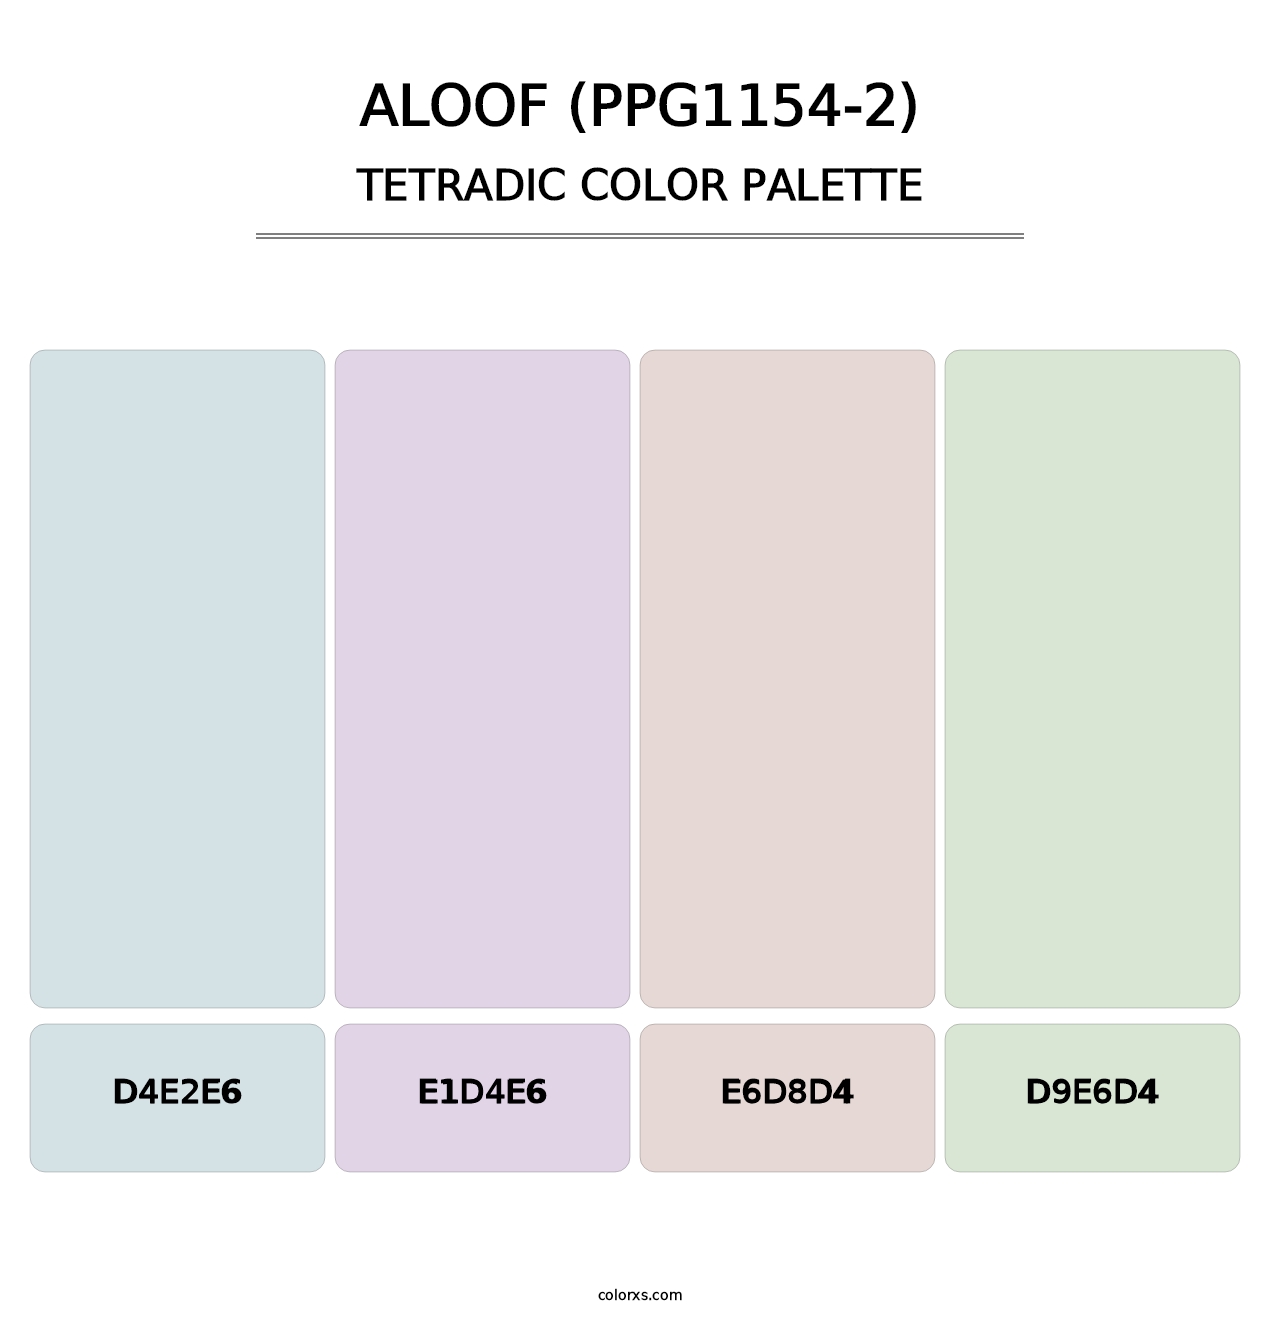 Aloof (PPG1154-2) - Tetradic Color Palette